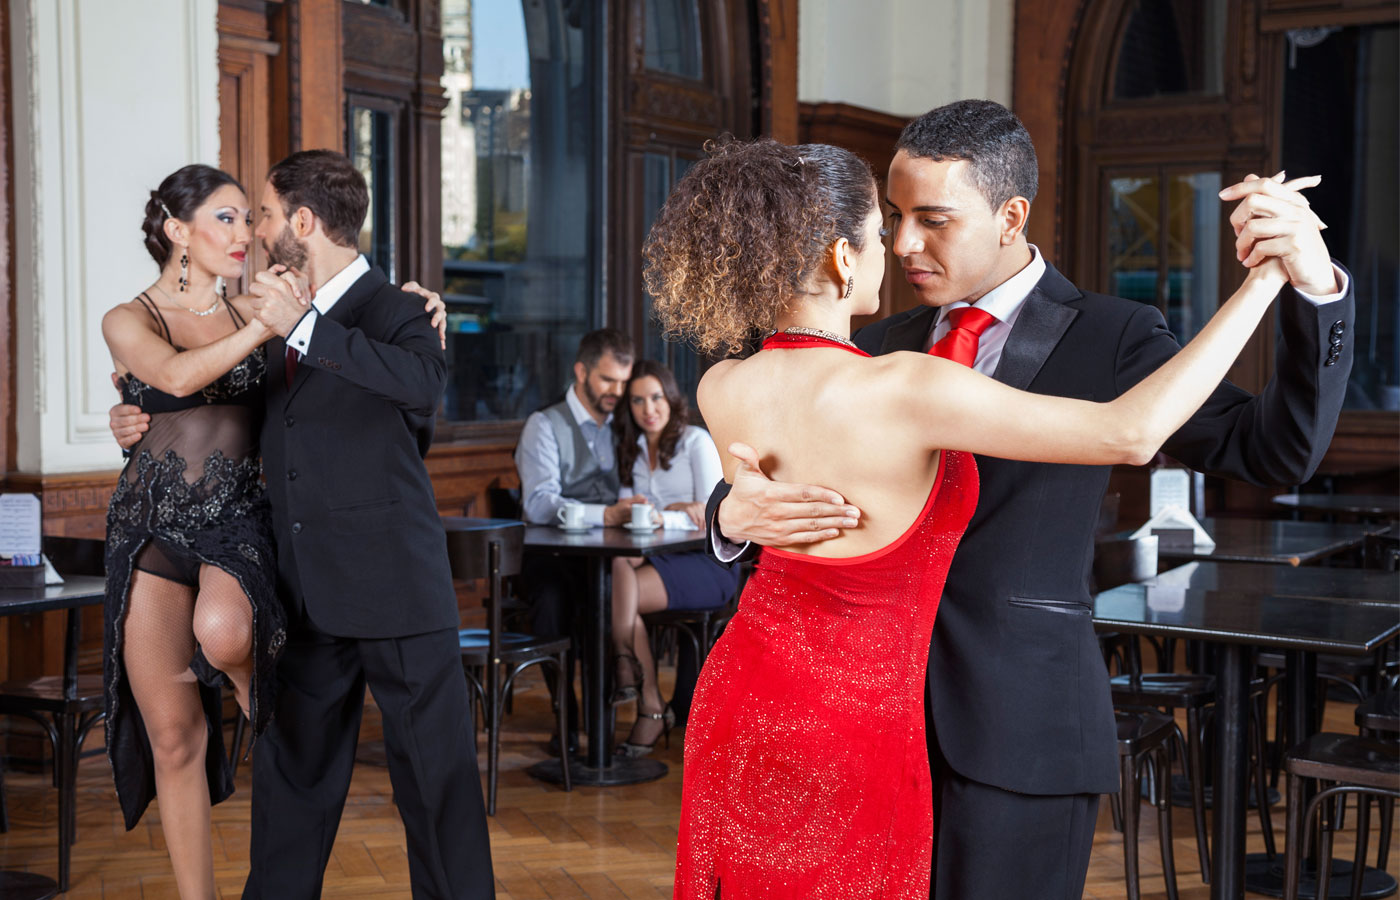 Wife dance. Танцы в ресторане. Пара танцует в ресторане. Танго кафе. Танец пары в ресторане.